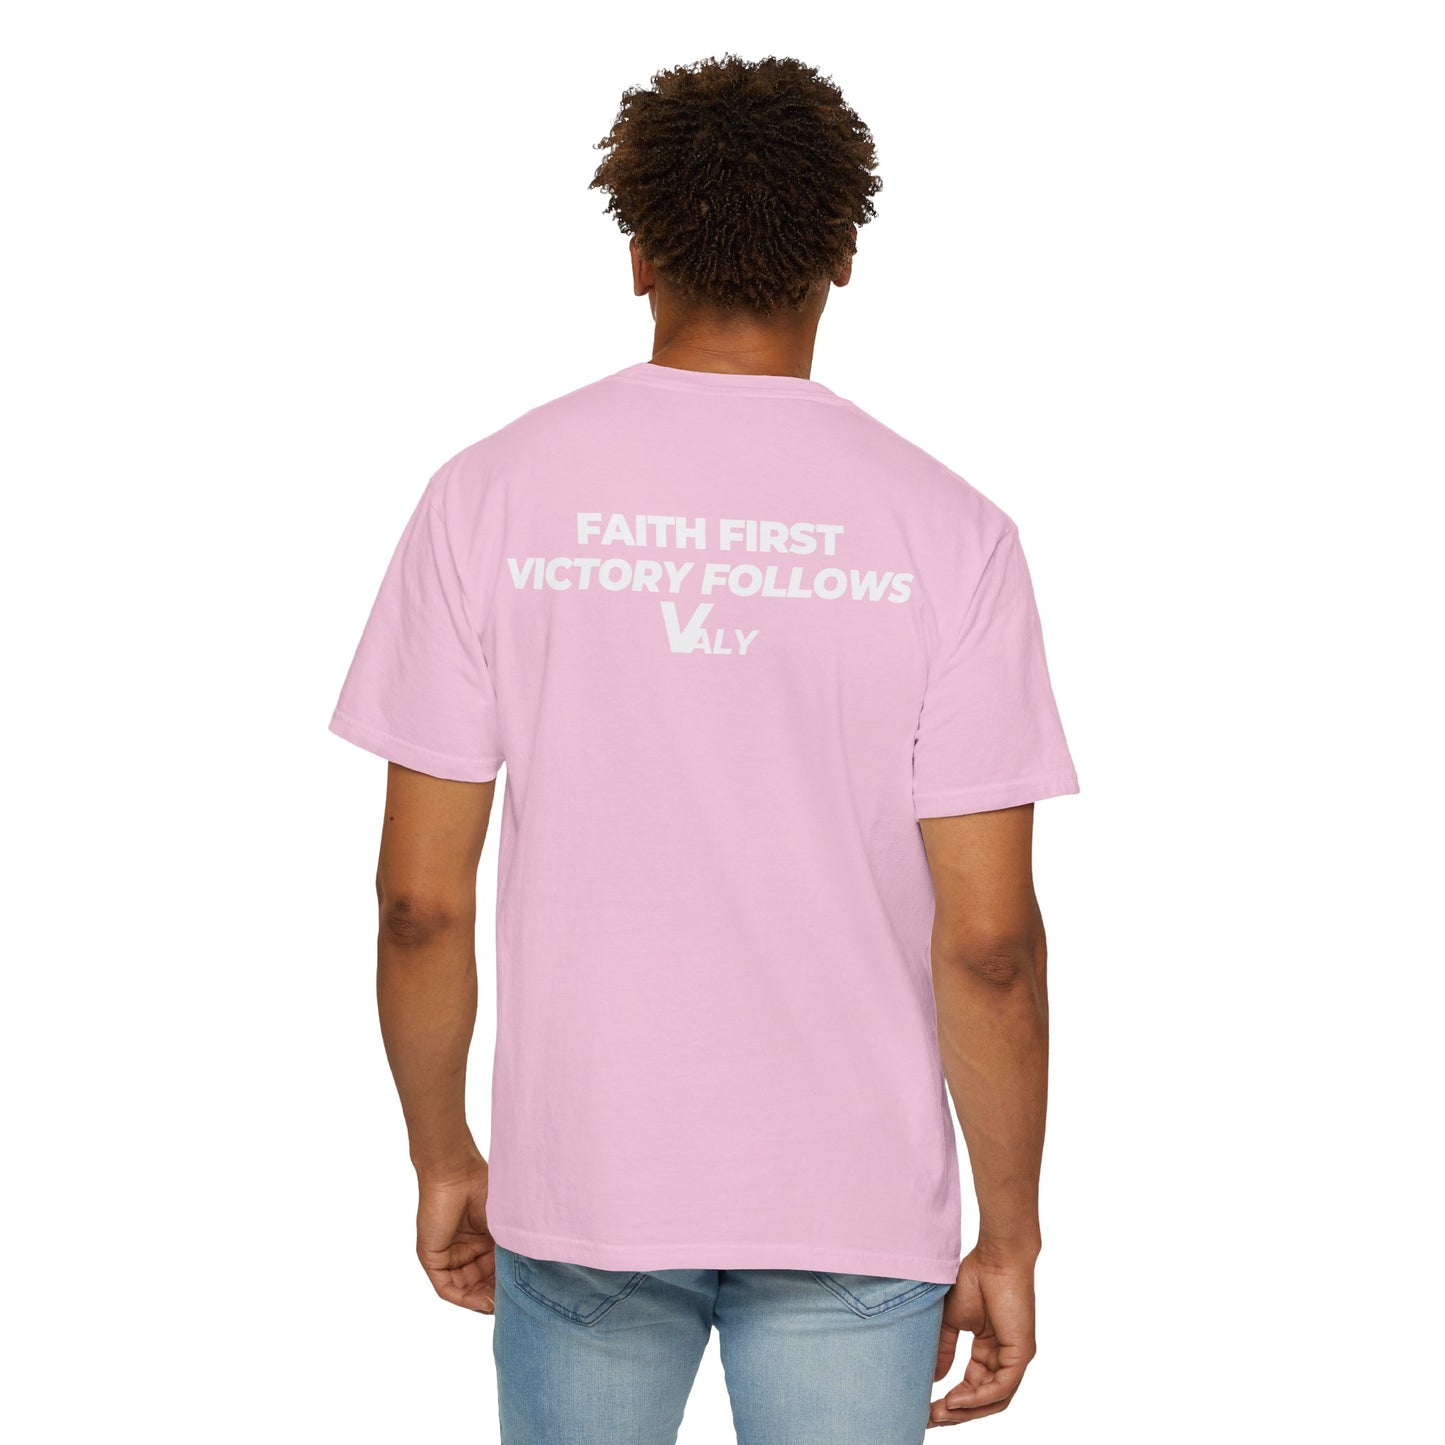 VALY Original T-Shirt - Light Pink